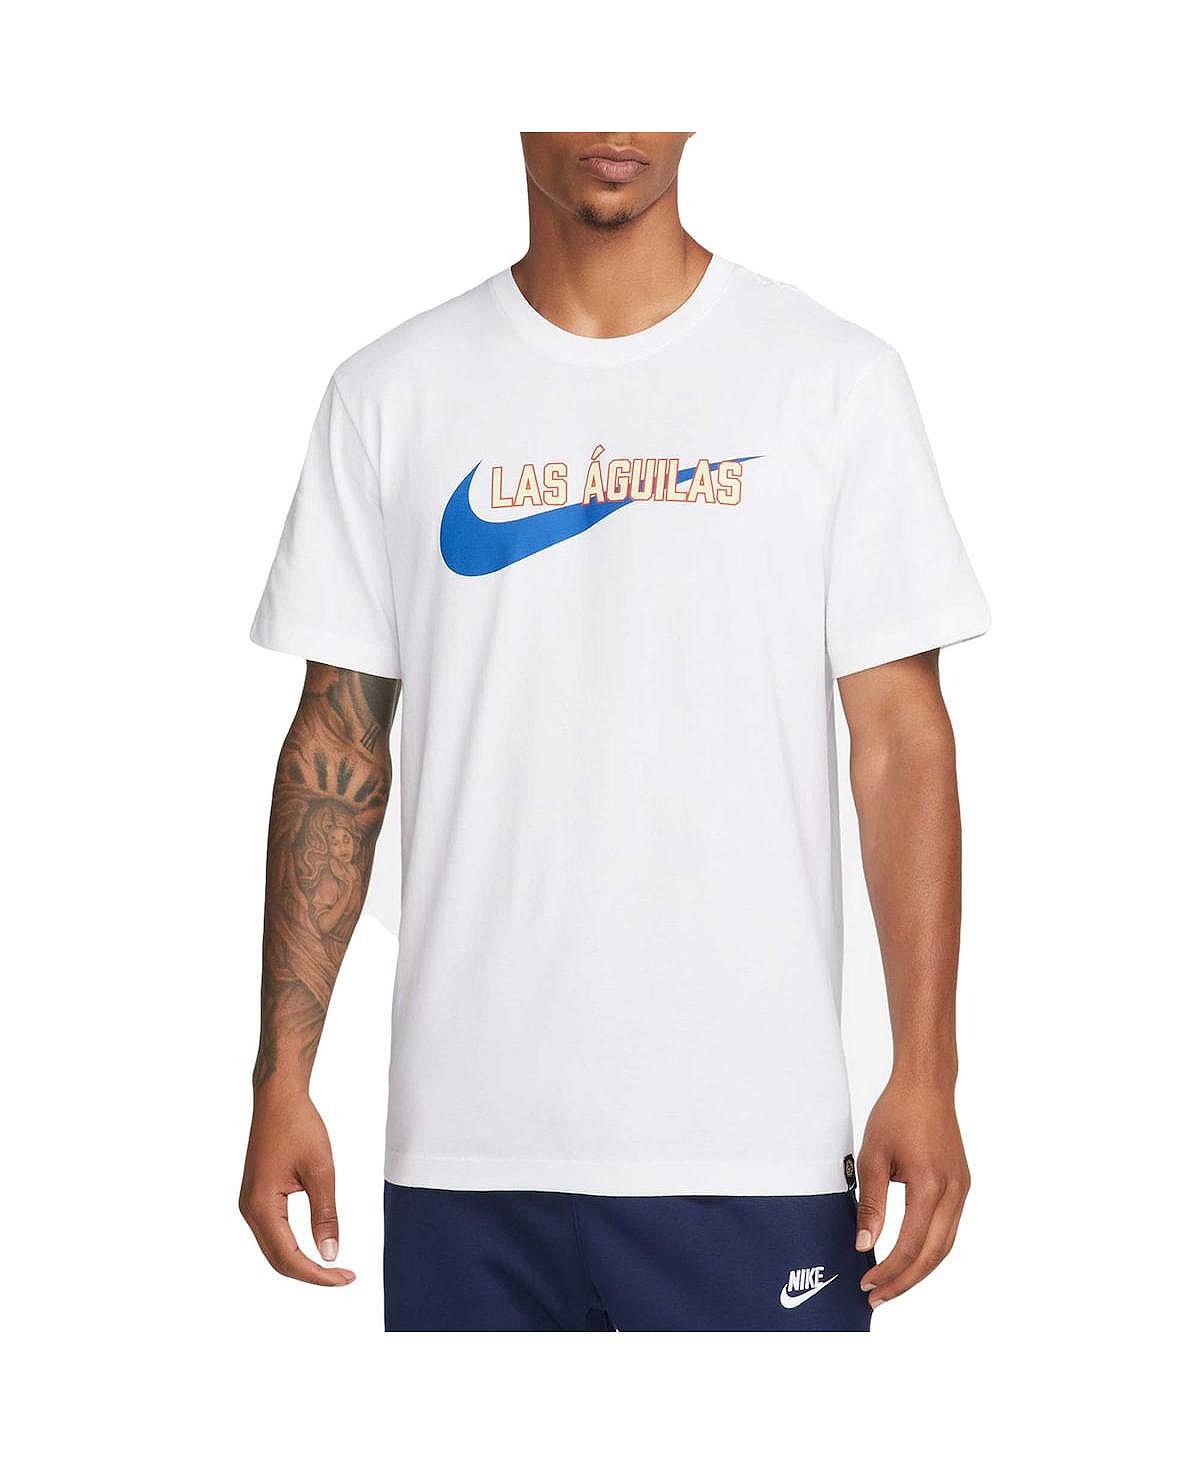 цена Мужская белая футболка Club America с галочкой Nike